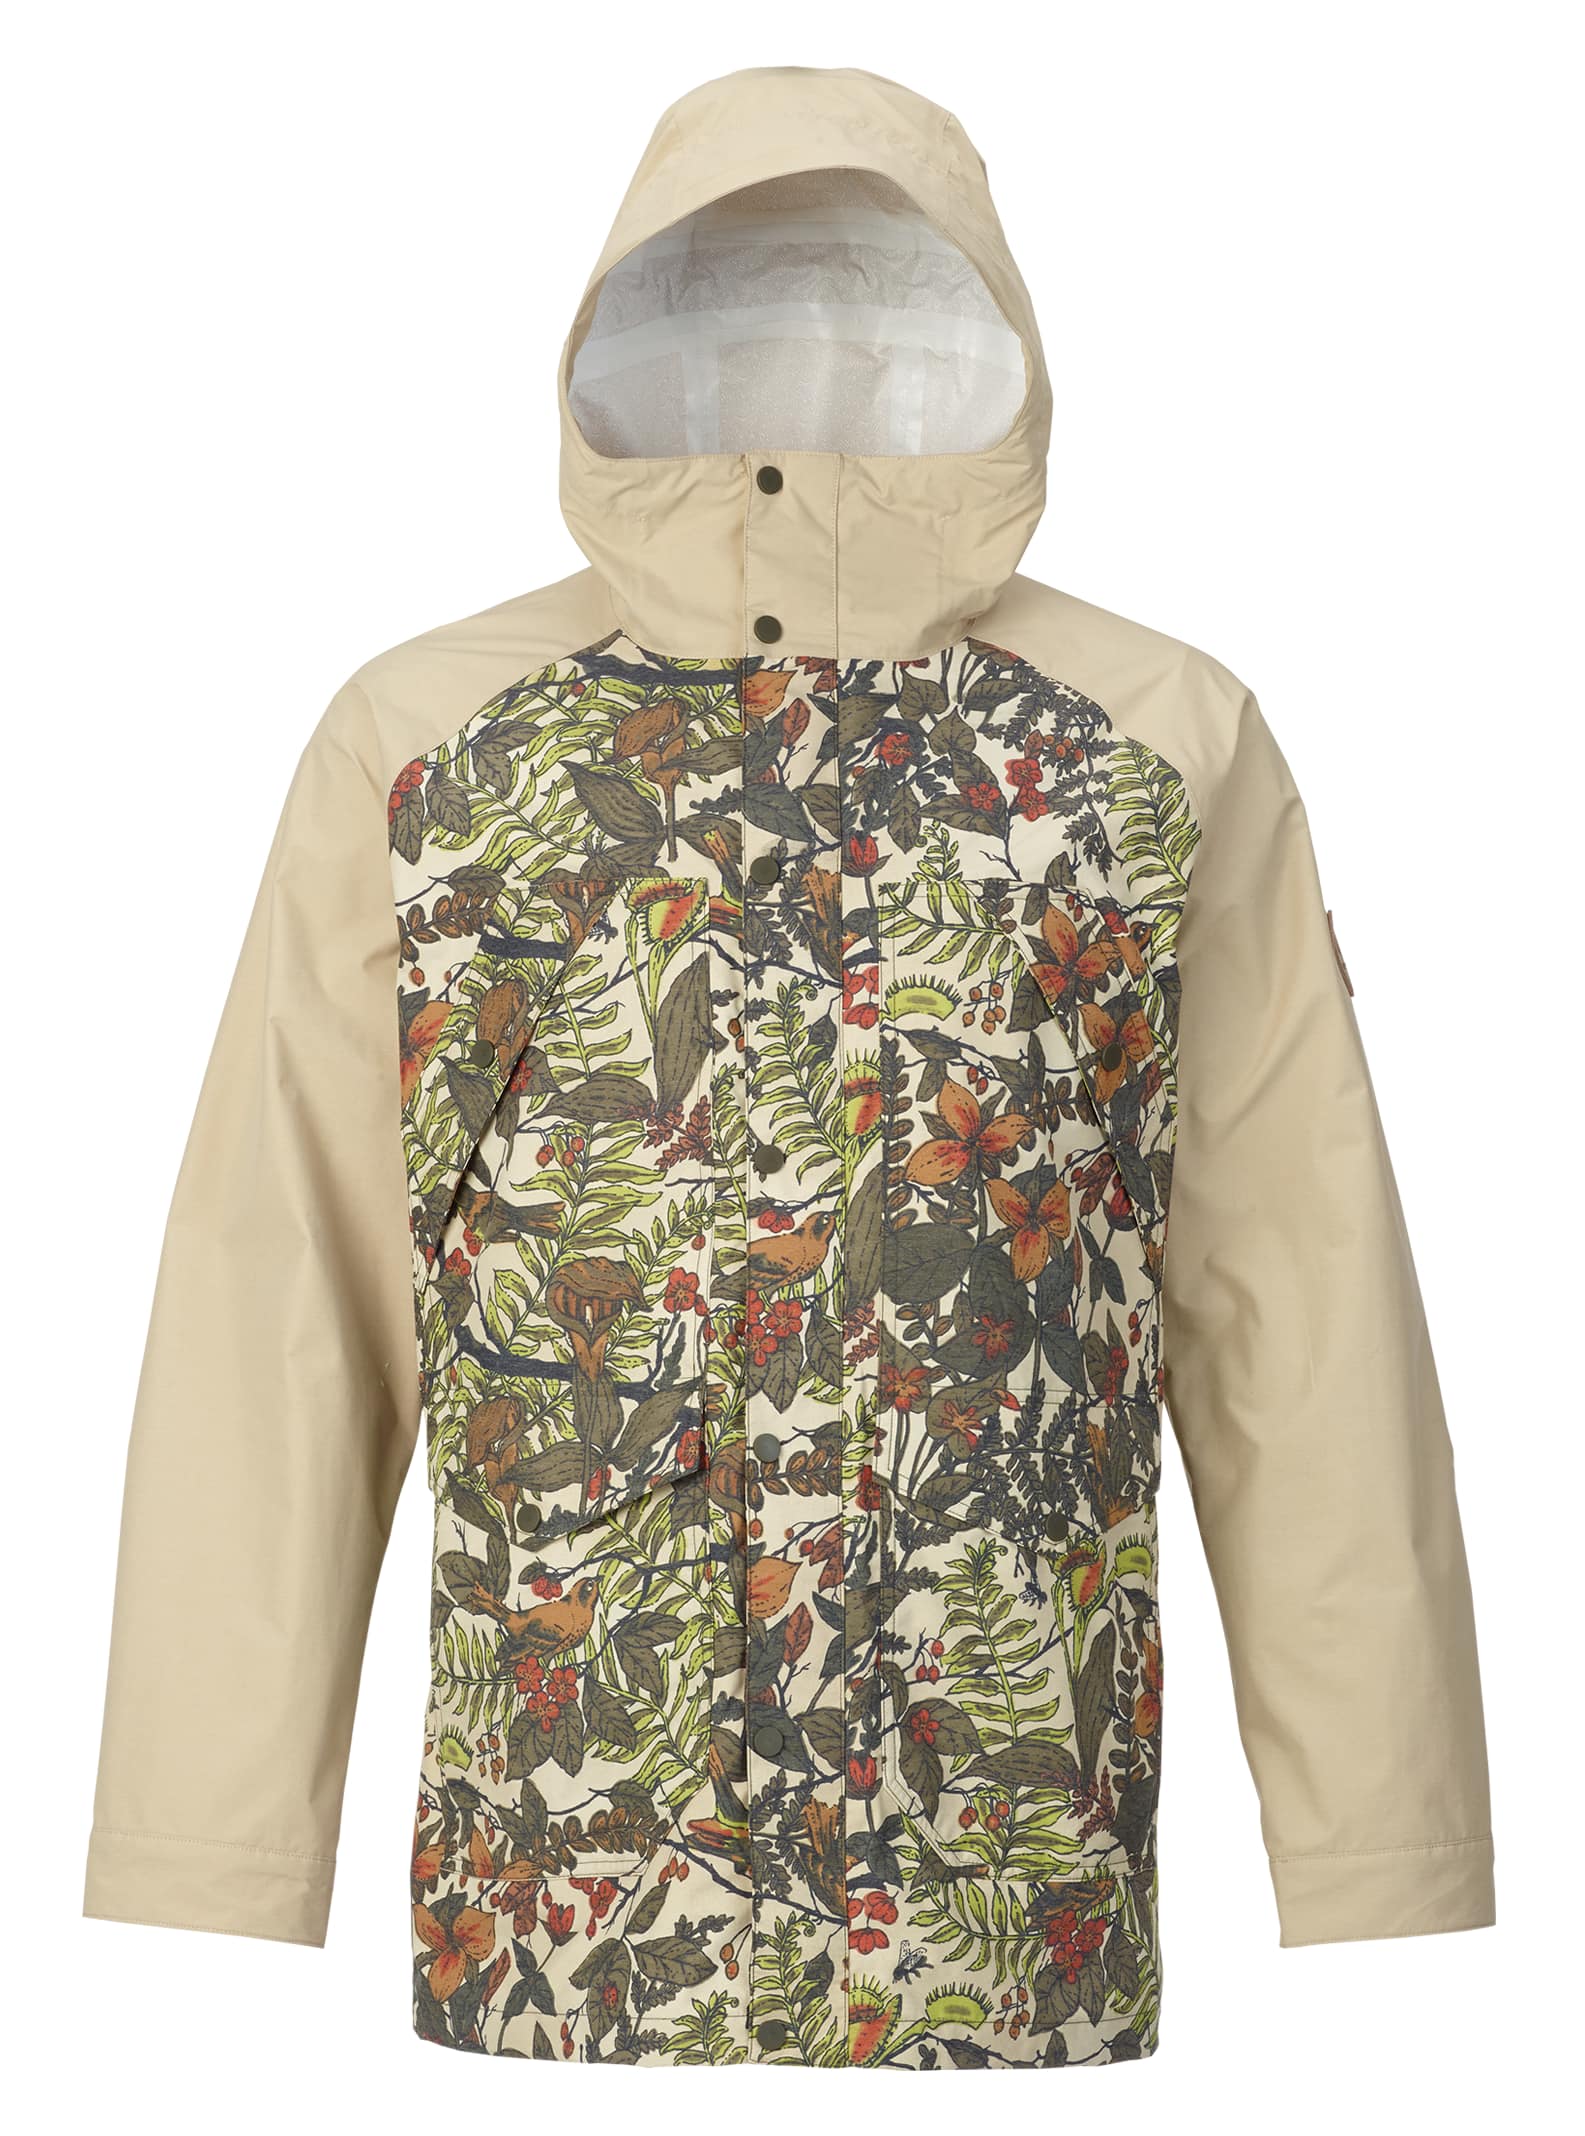 Men/'s Burton Nightcrawler Rain Jacket Size XL NWT $149 Retail NEW